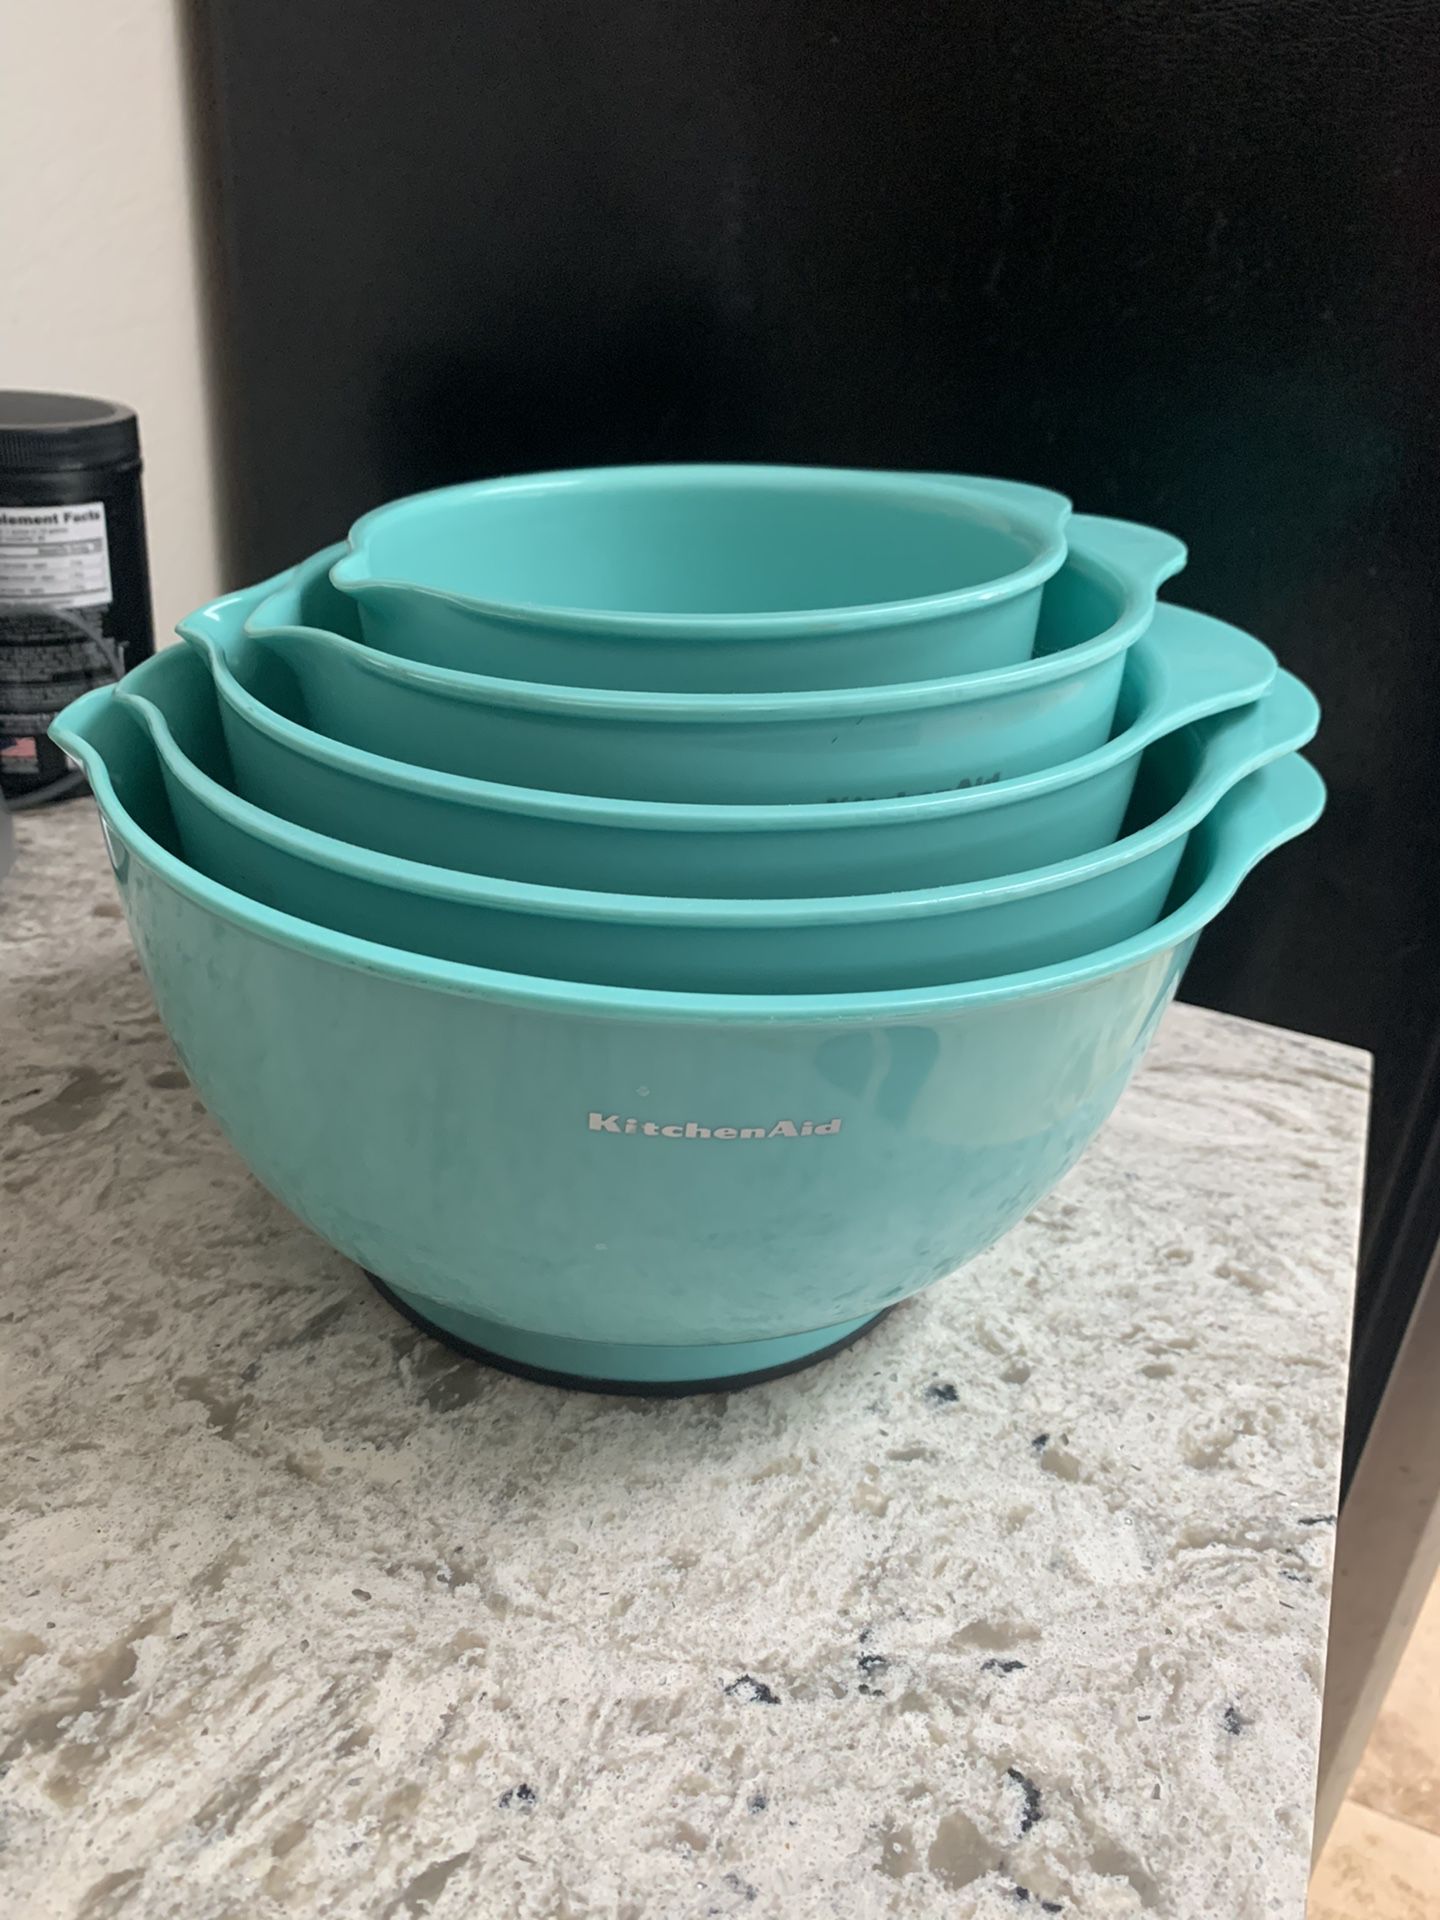 Kitchen aid mixing bowls